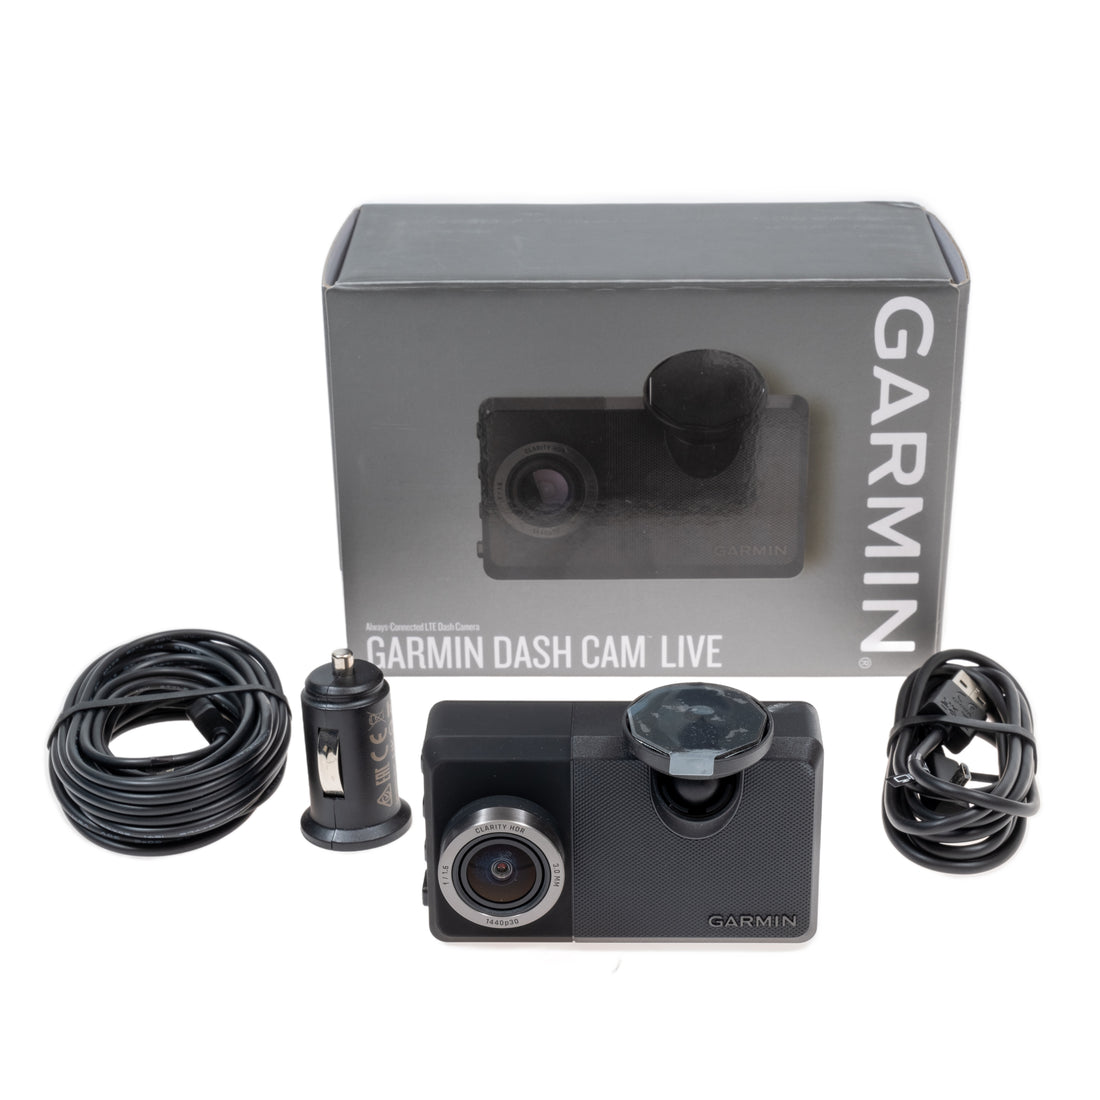 Toyota Tacoma Garmin Dash Camera Bundles Installation Guide